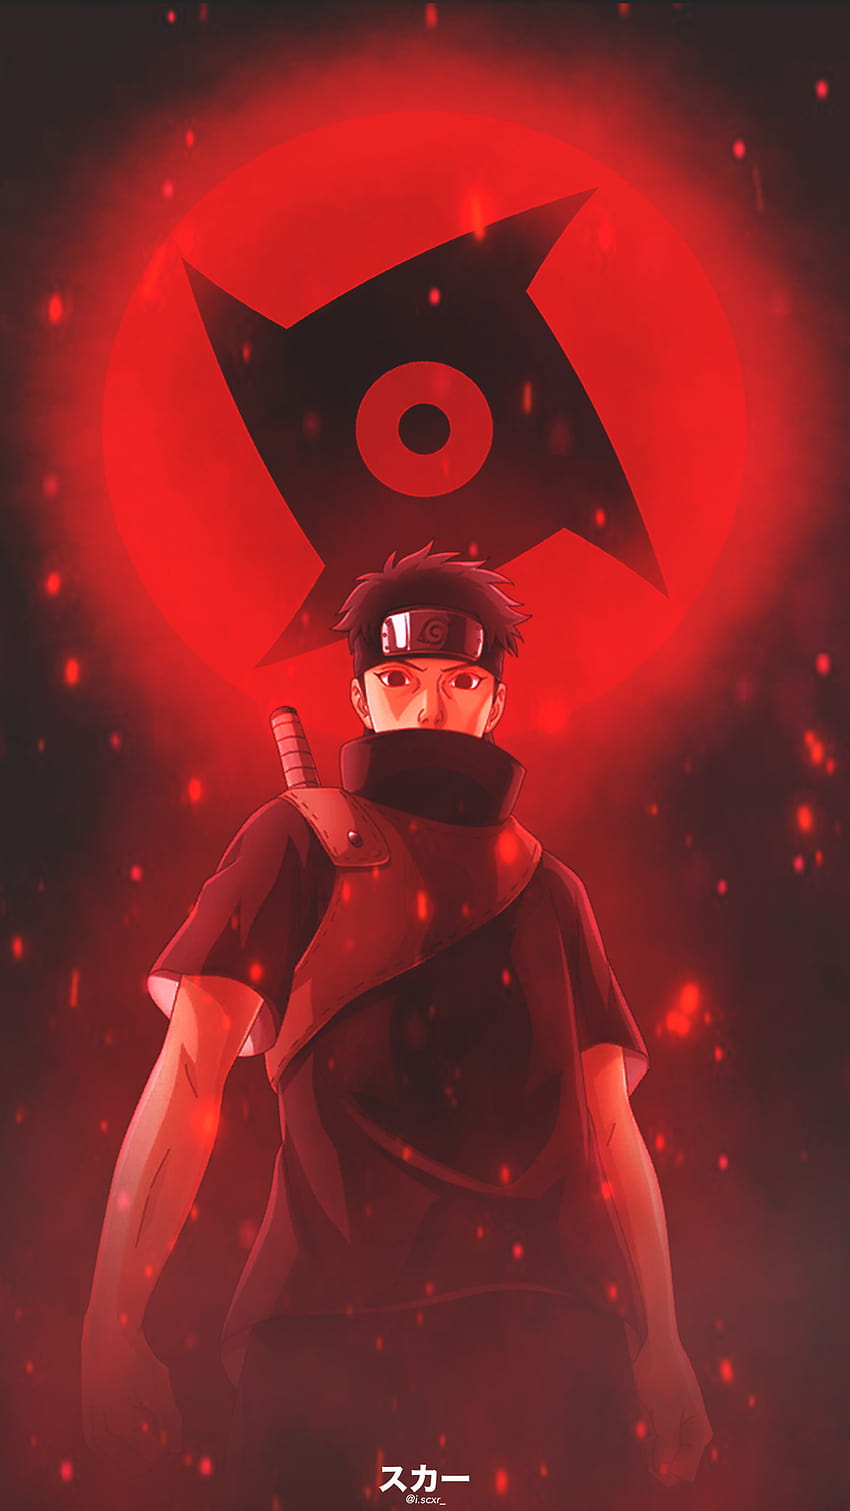 What do you think about the Kotoamatsukami : r/Naruto